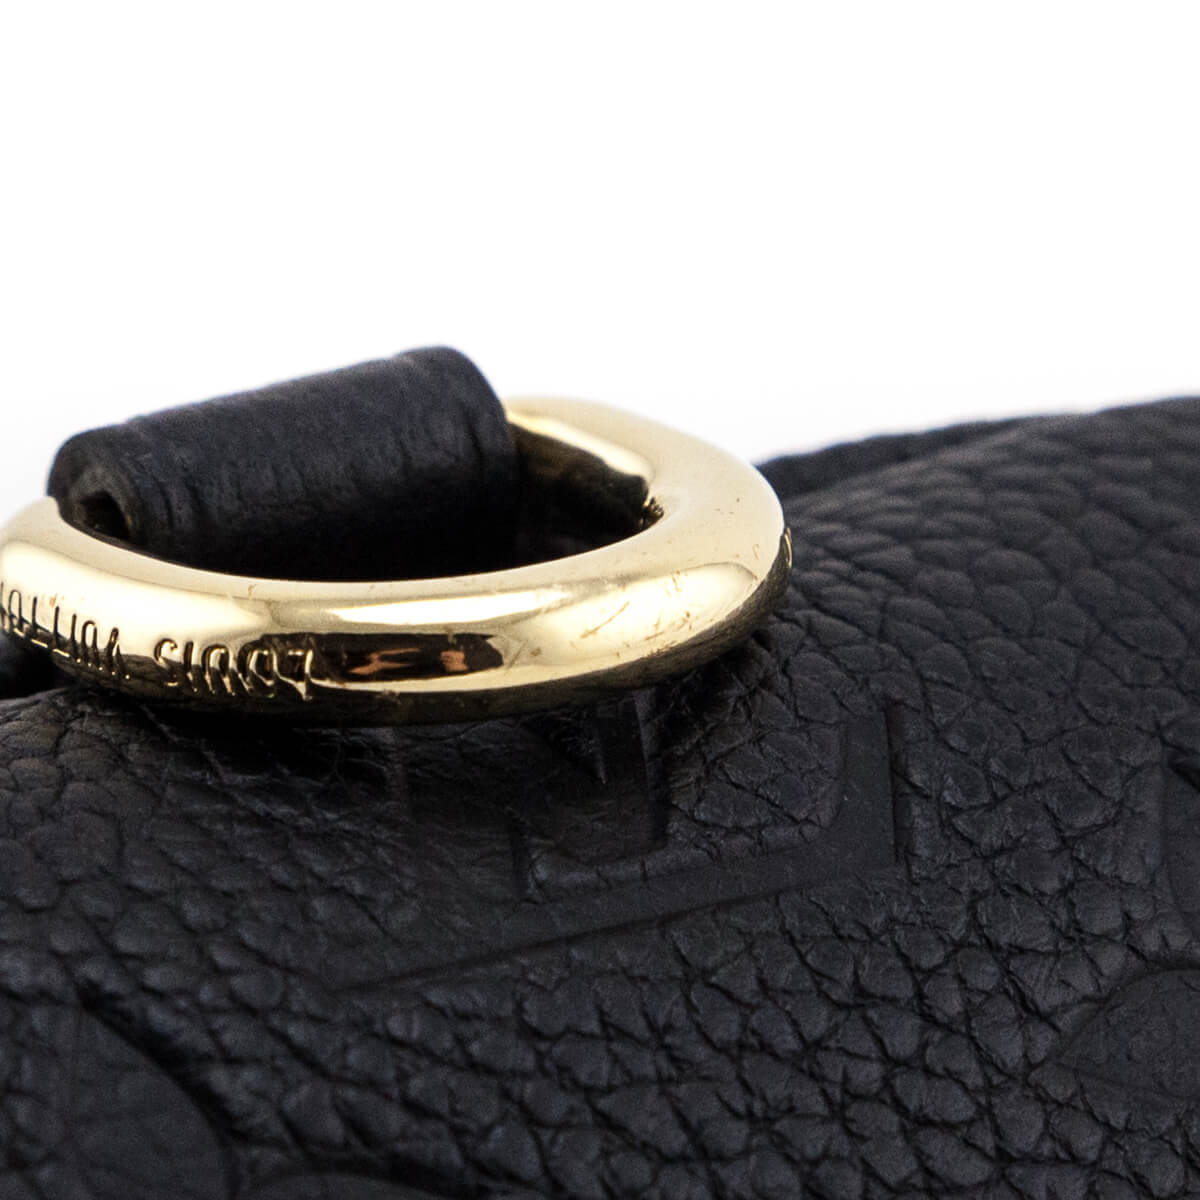 Louis Vuitton Black Monogram Empreinte Bumbag - Love that Bag etc - Preowned Authentic Designer Handbags & Preloved Fashions